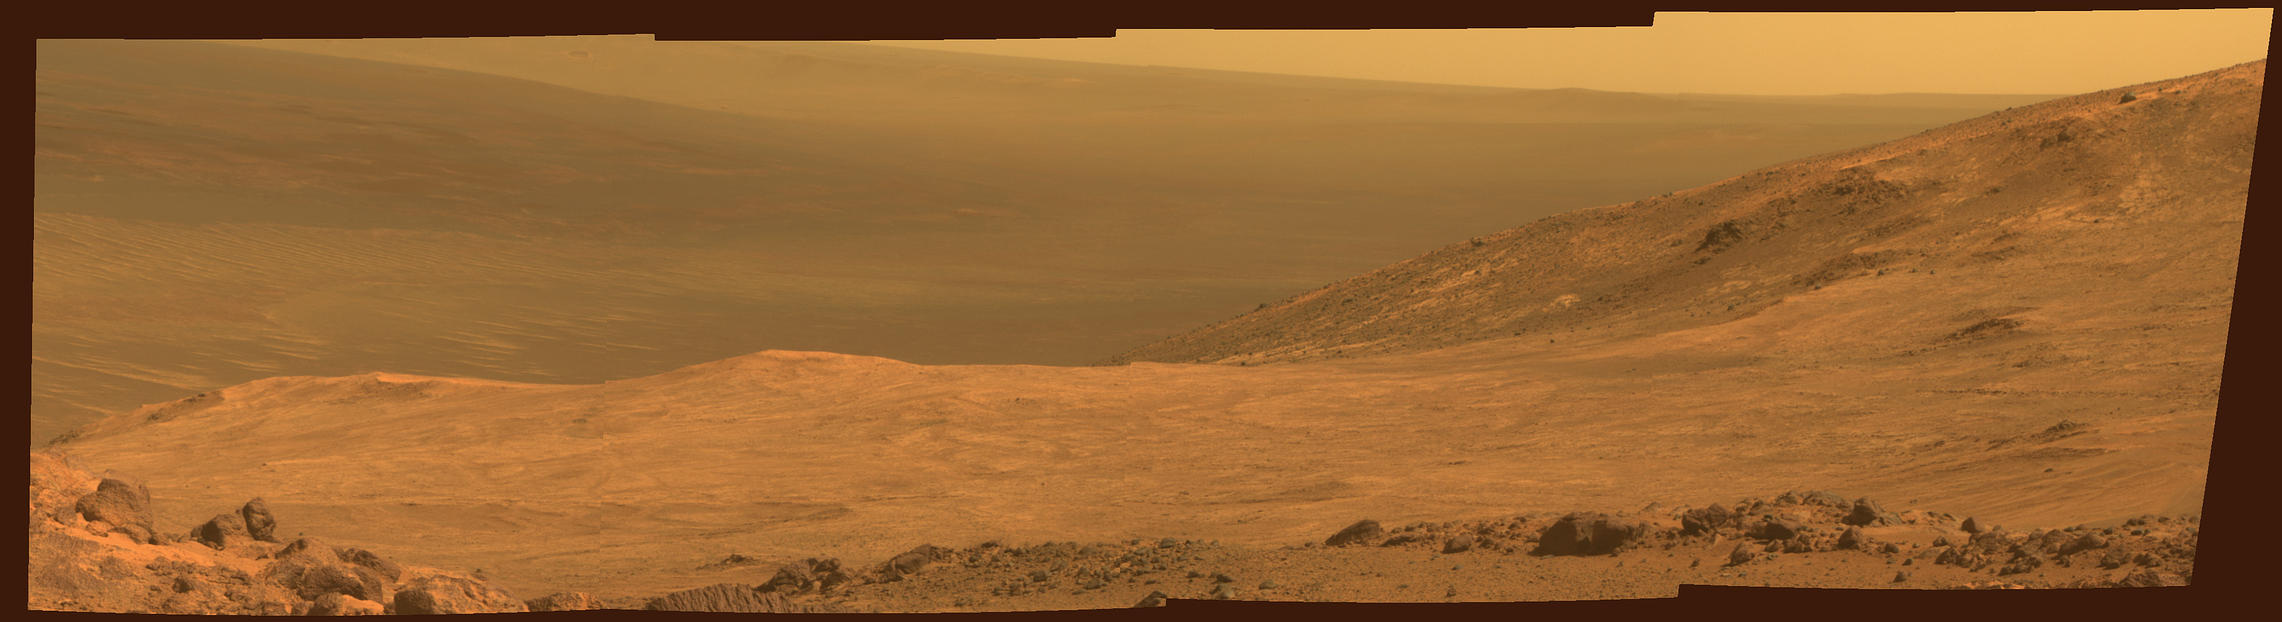 Mars 'Marathon Valley' Overlook